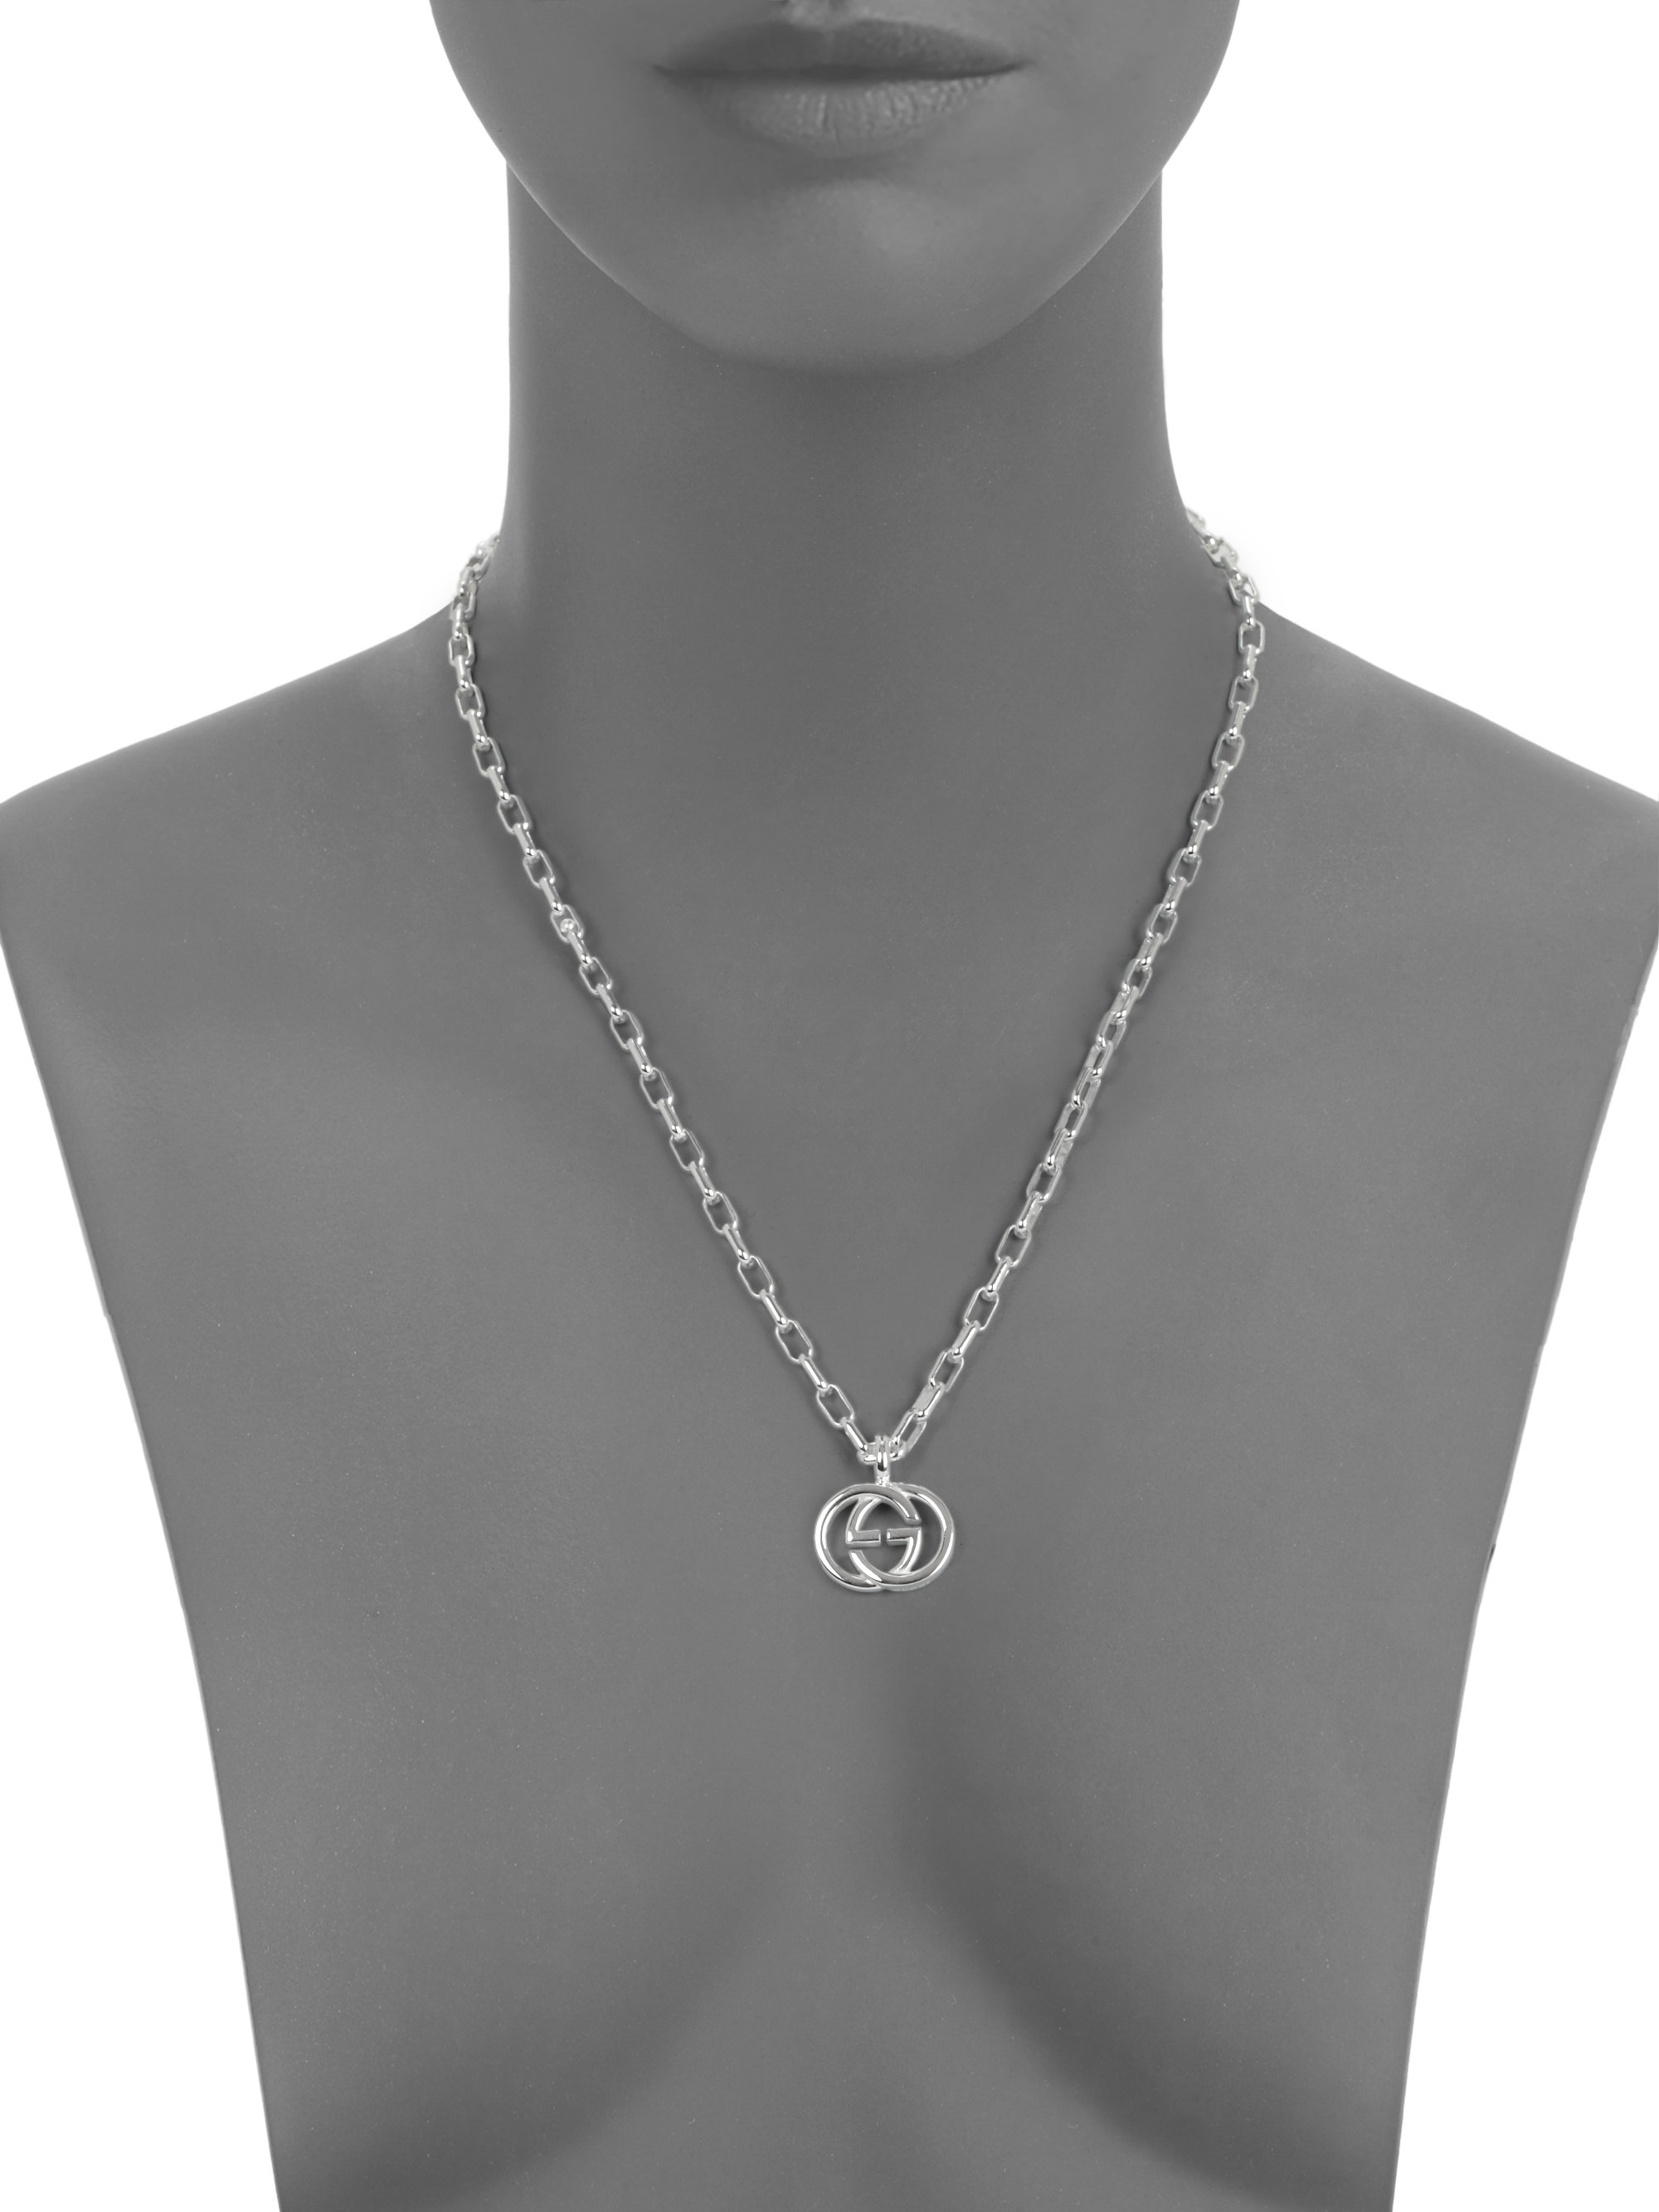 interlocking g pendant necklace